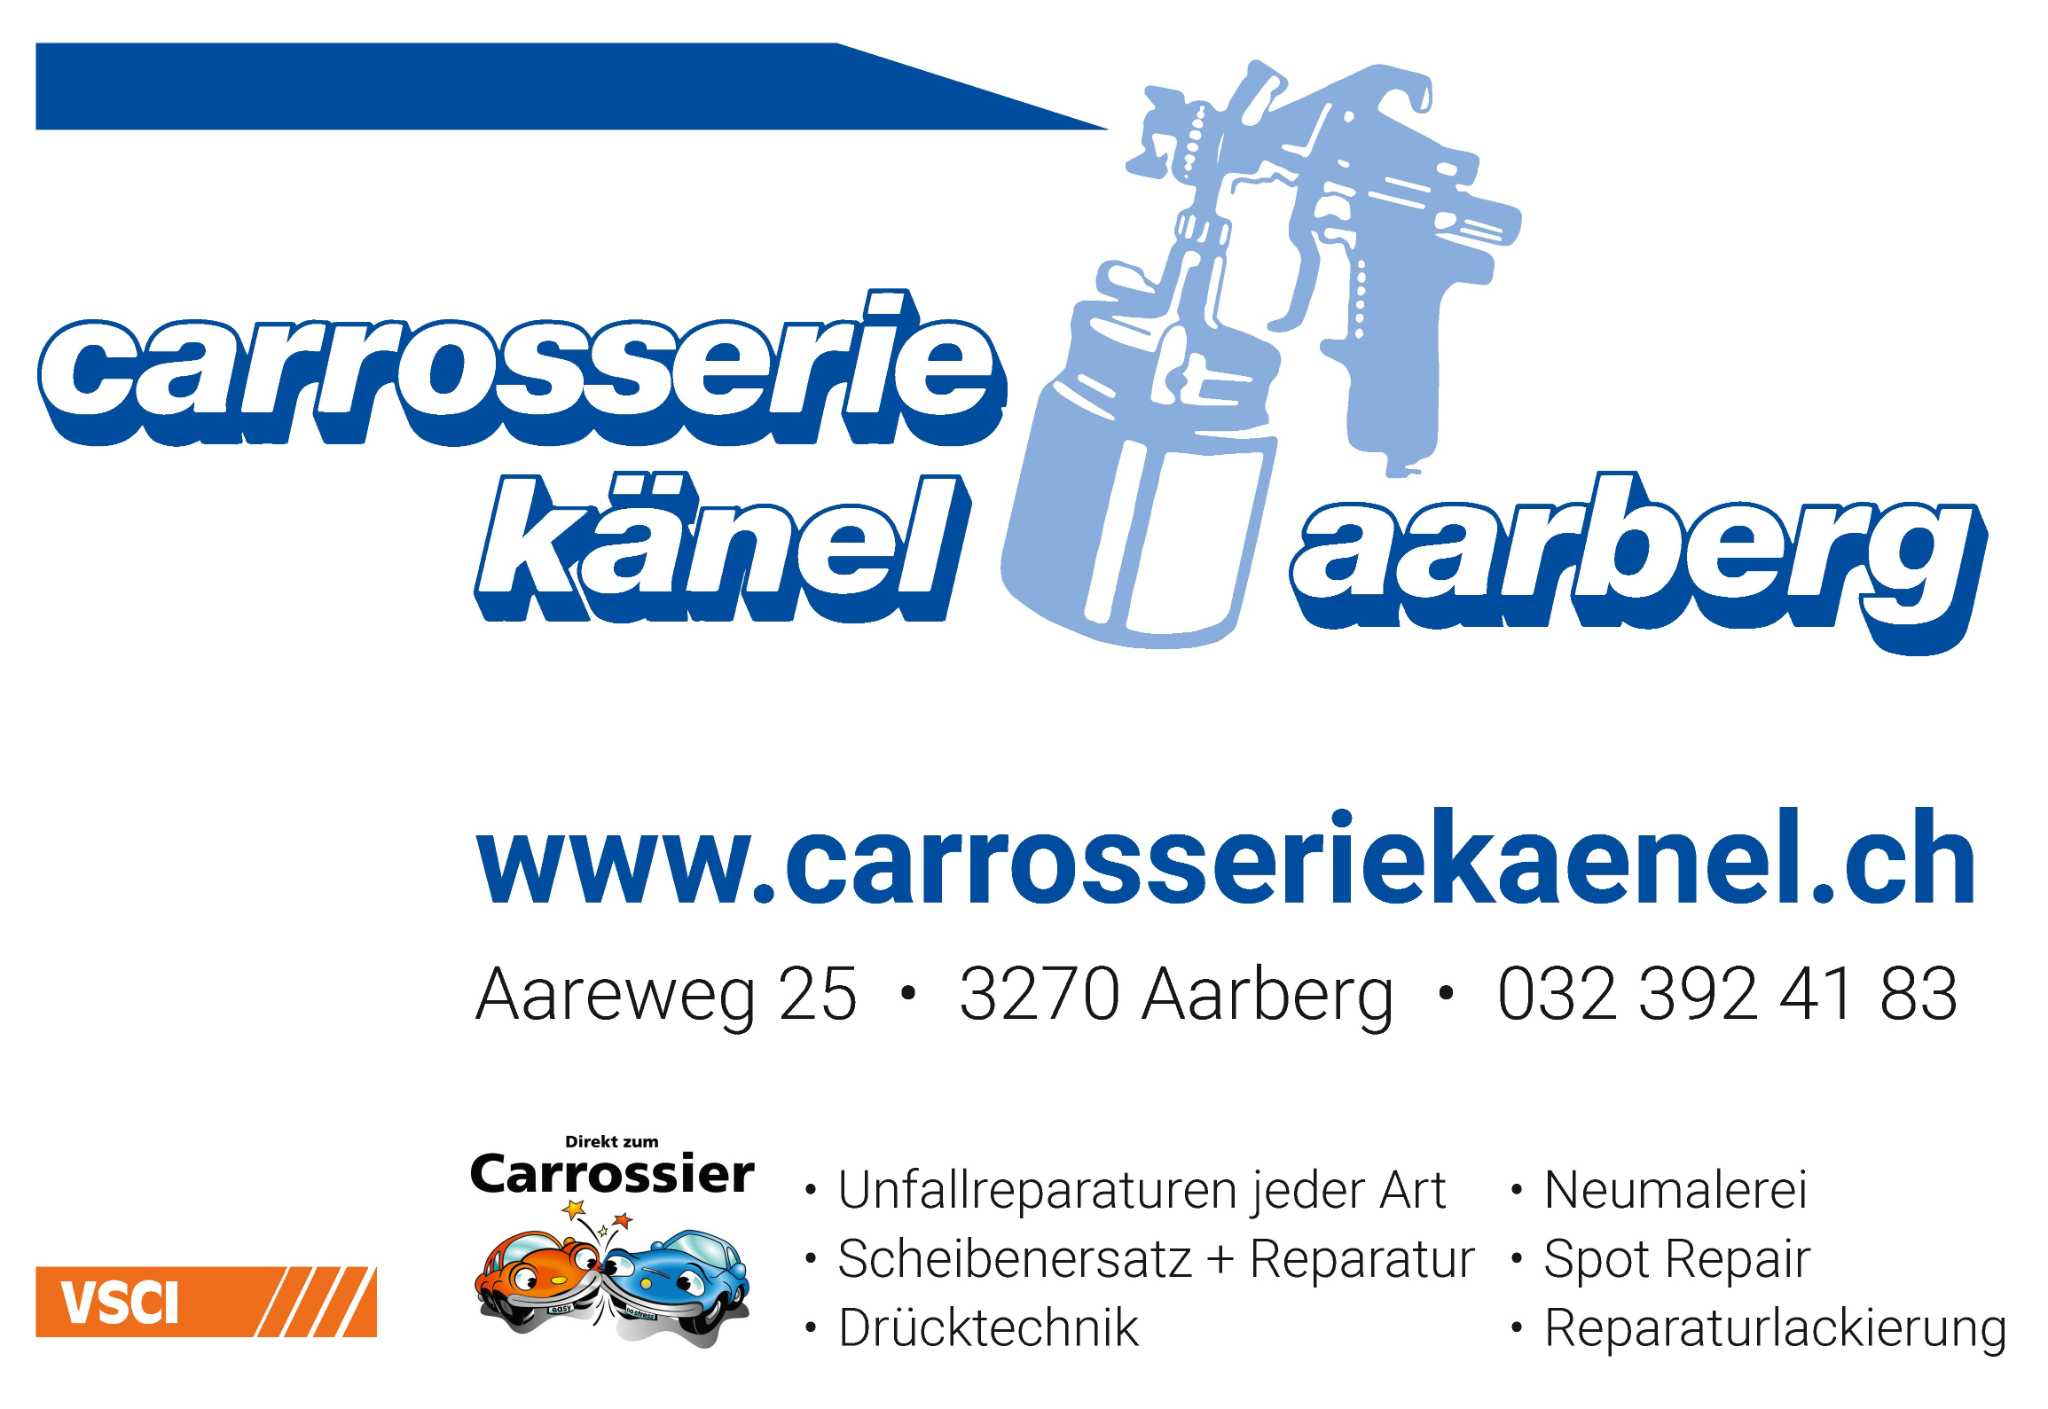 Carrosserie Känel GmbH